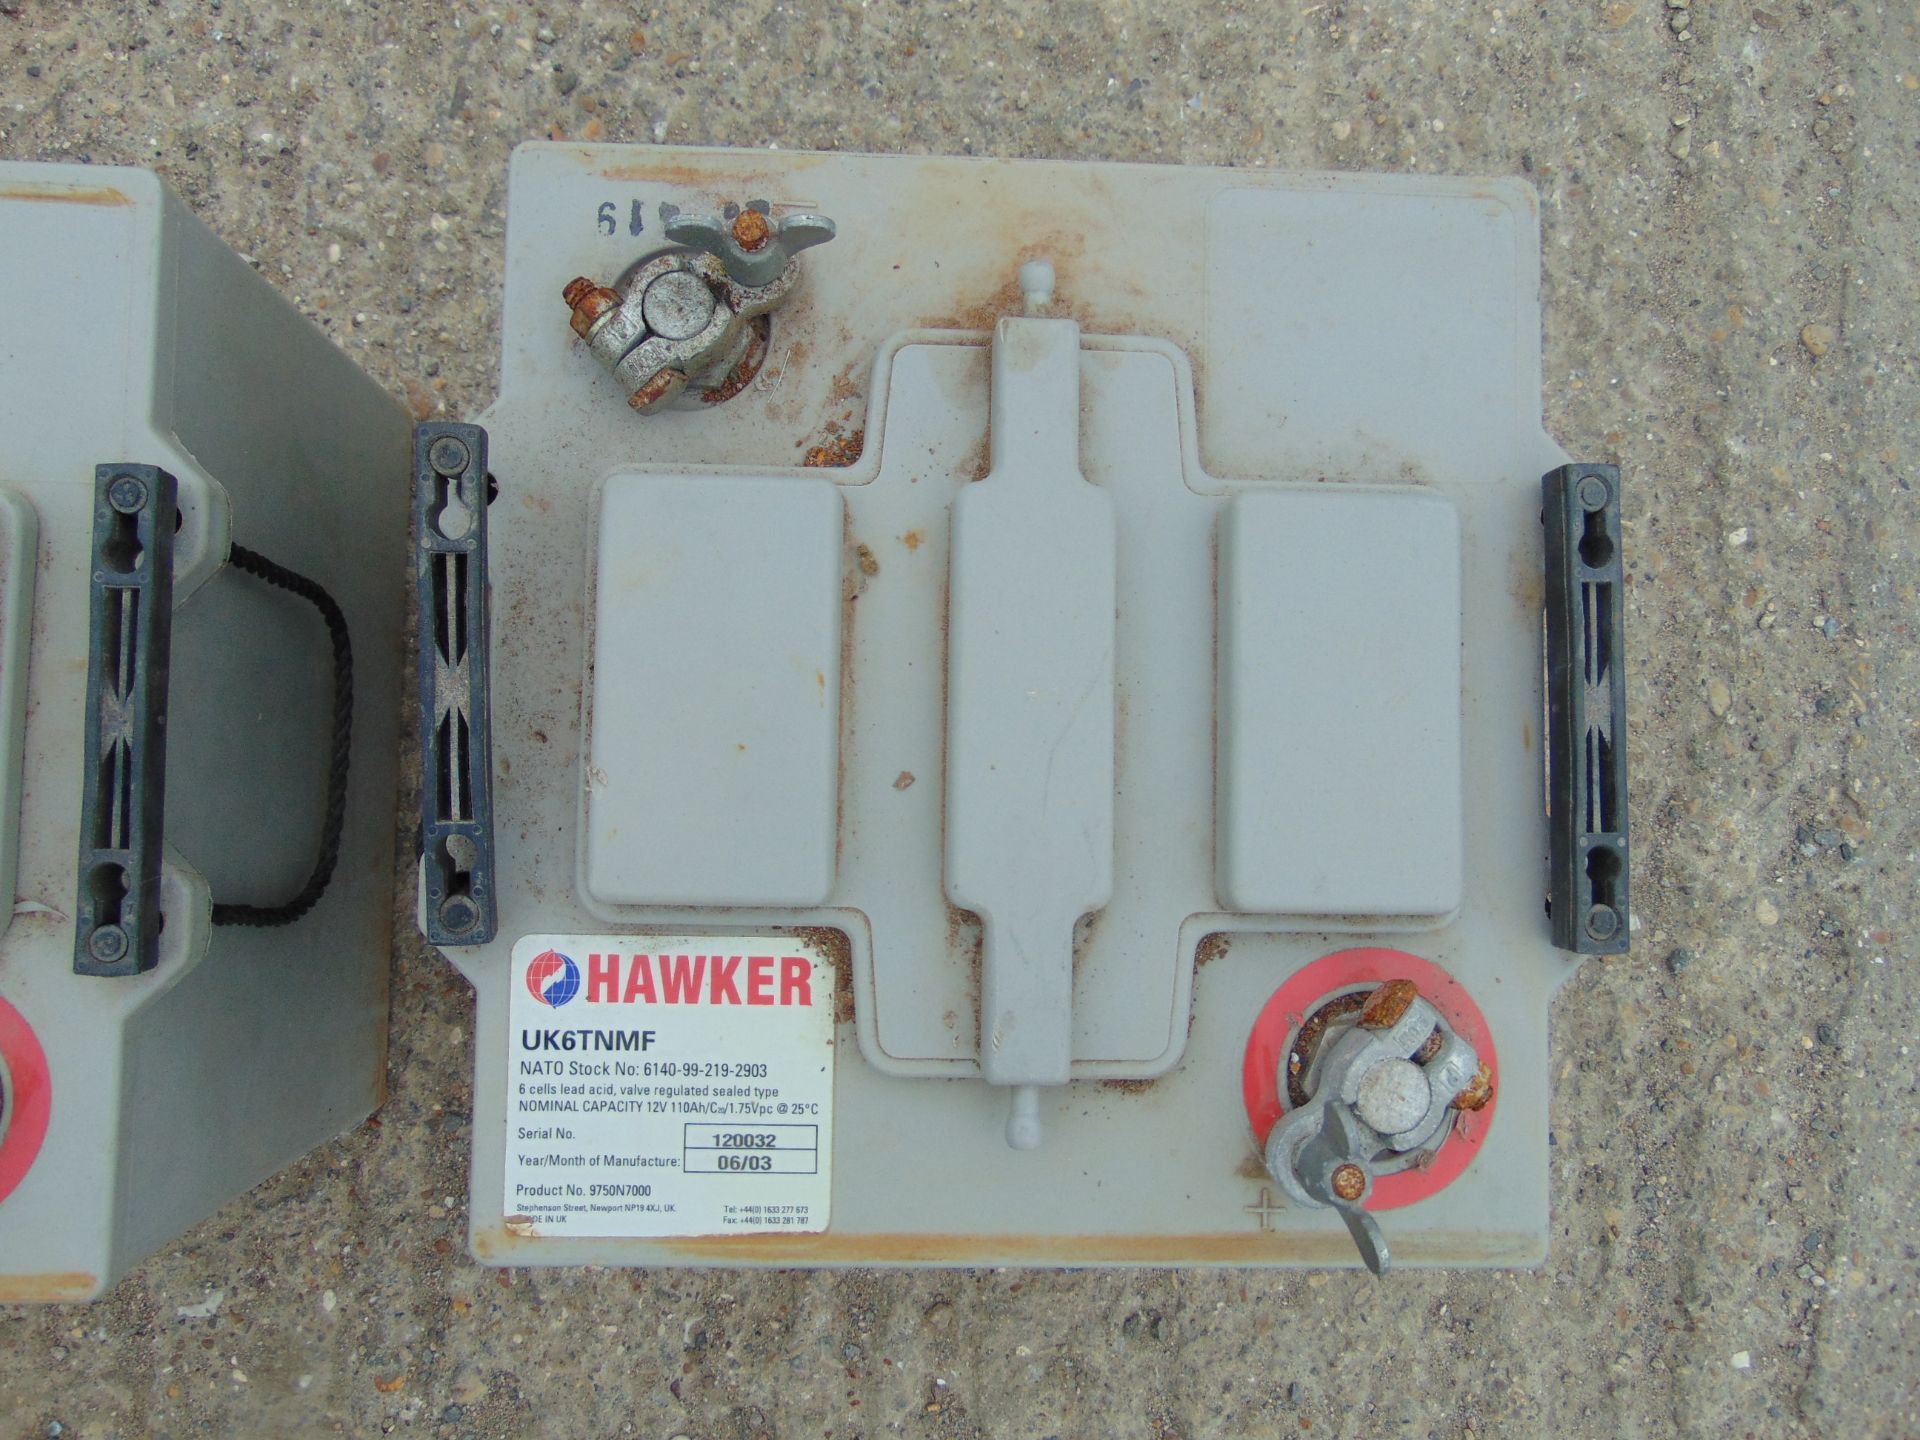 2 x Hawker UK6TNMF Batteries - Image 3 of 4